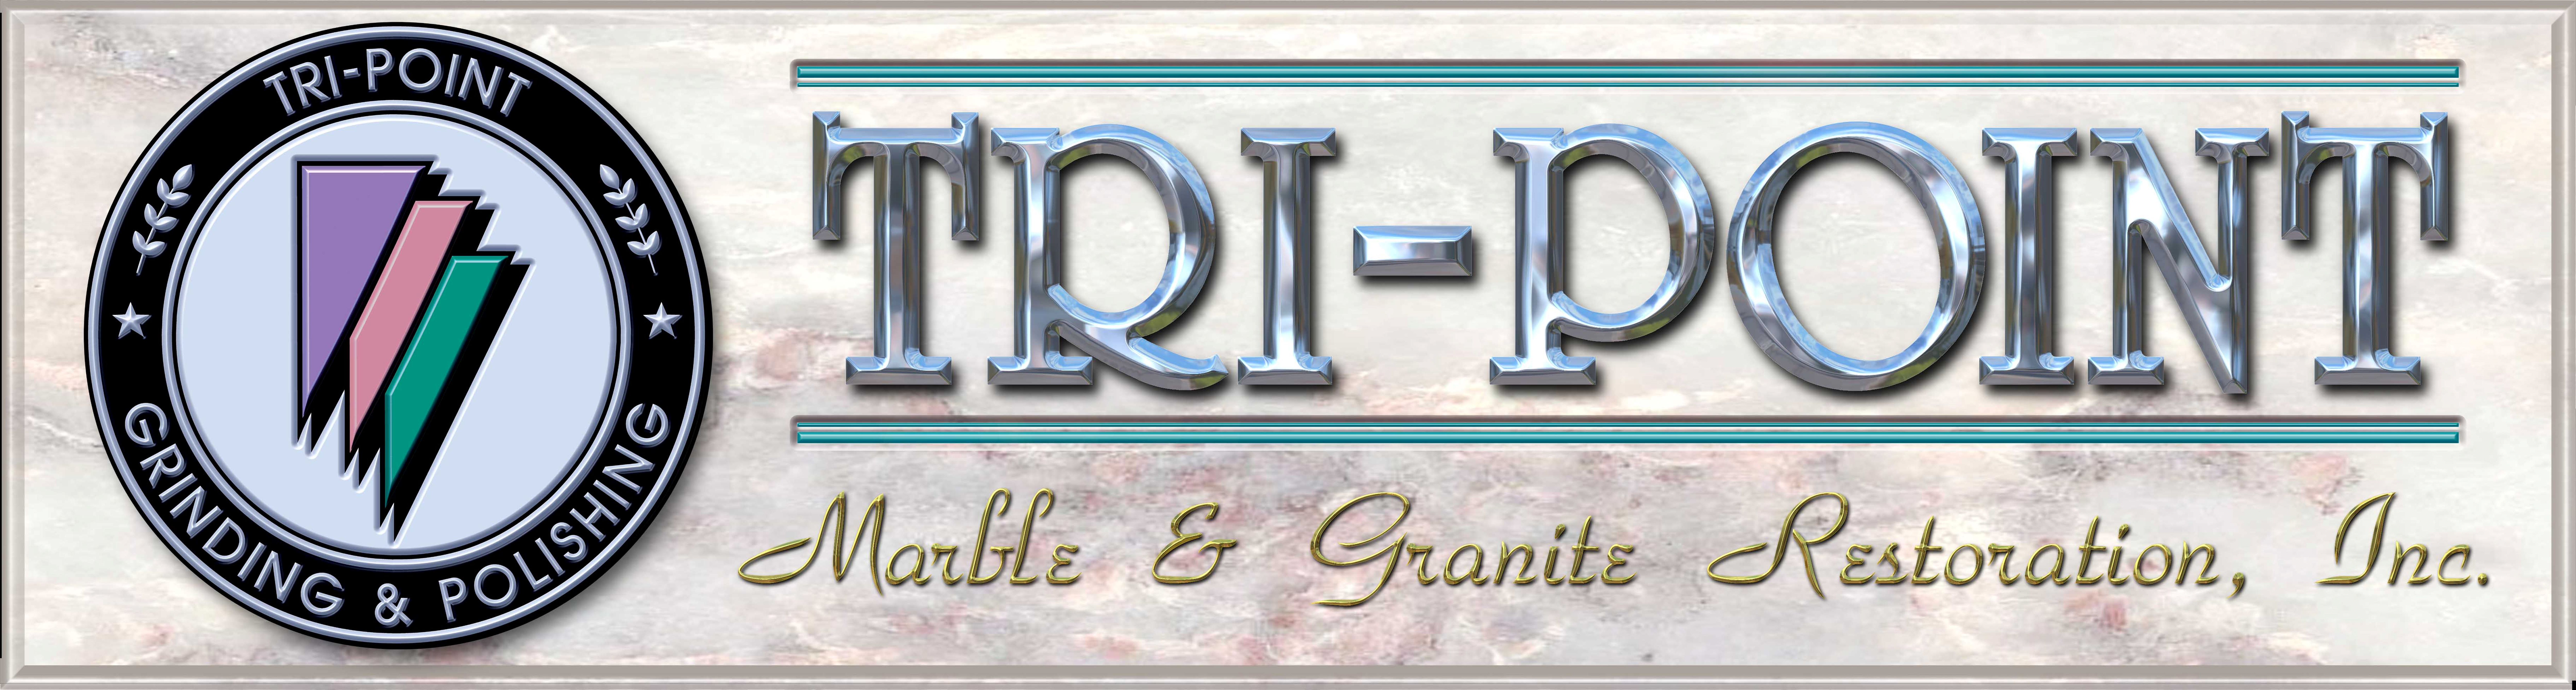 Tri-Point Marble & Granite Restoration, Inc. Logo